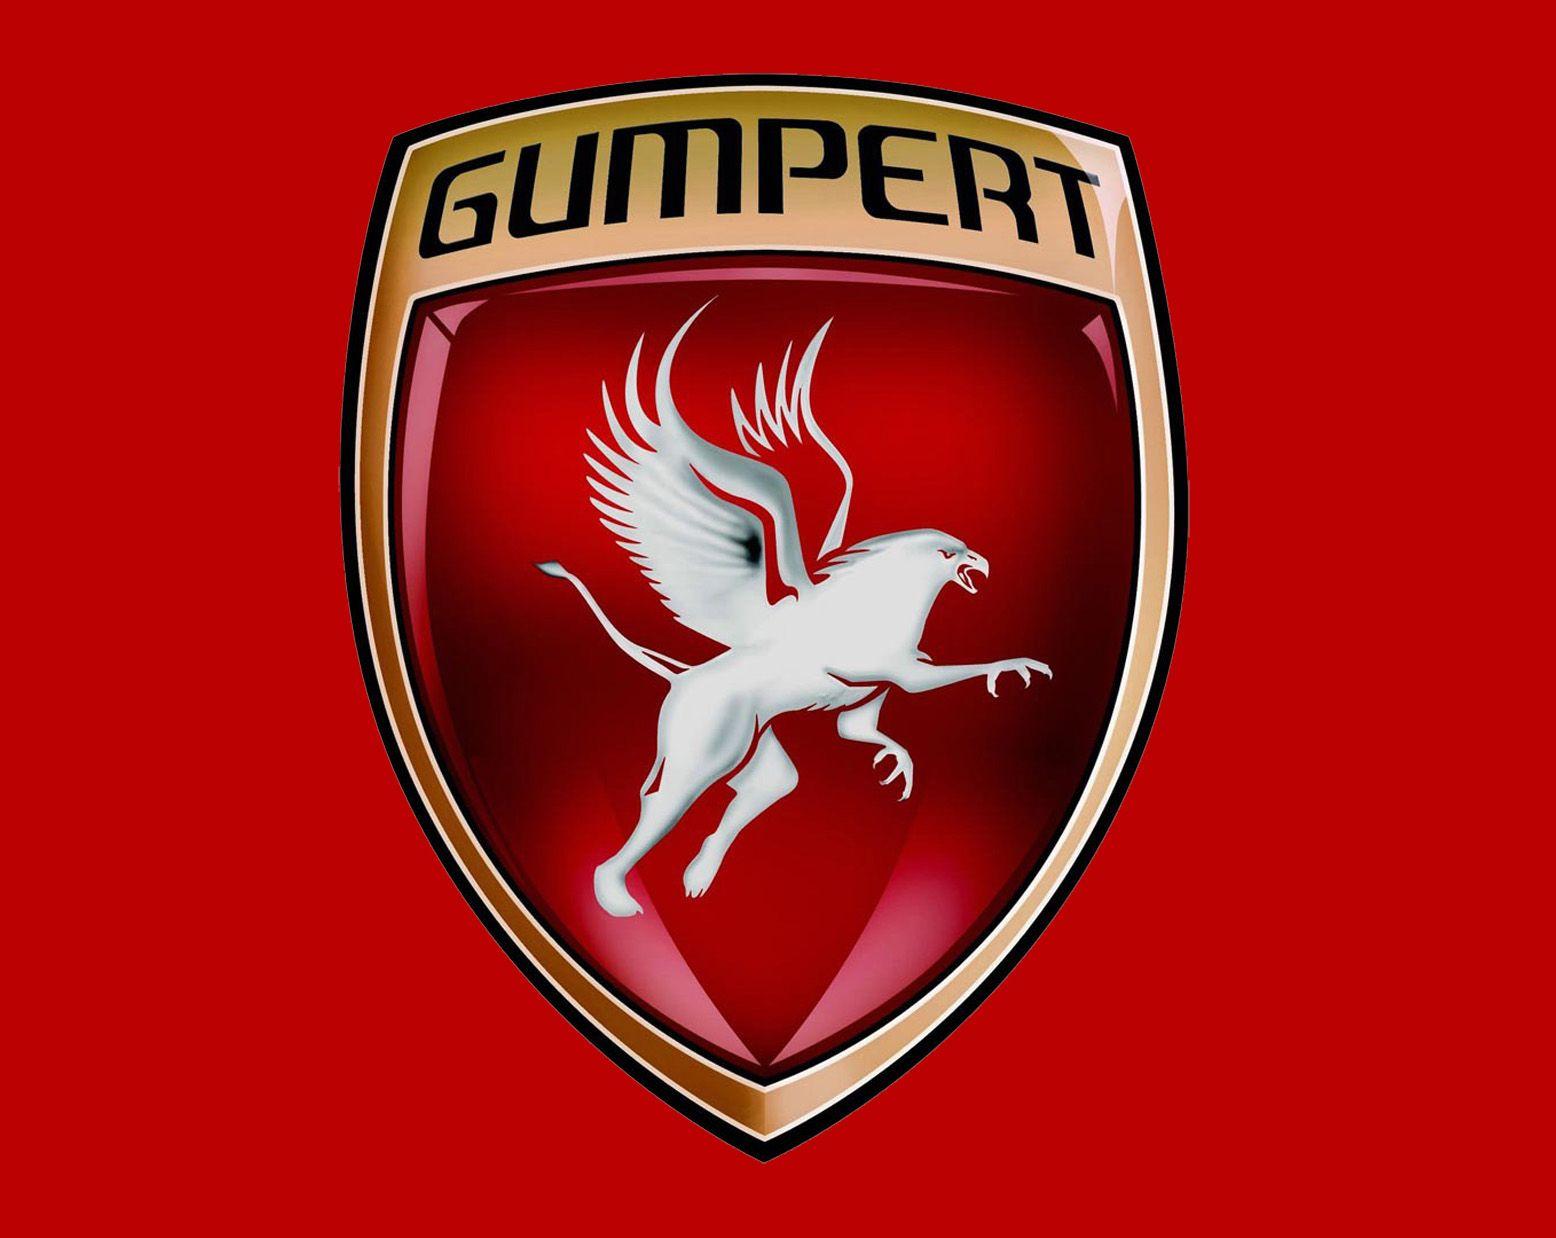 Gumpert Logo - Gumpert Logo Meaning and History, latest models | World Cars Brands